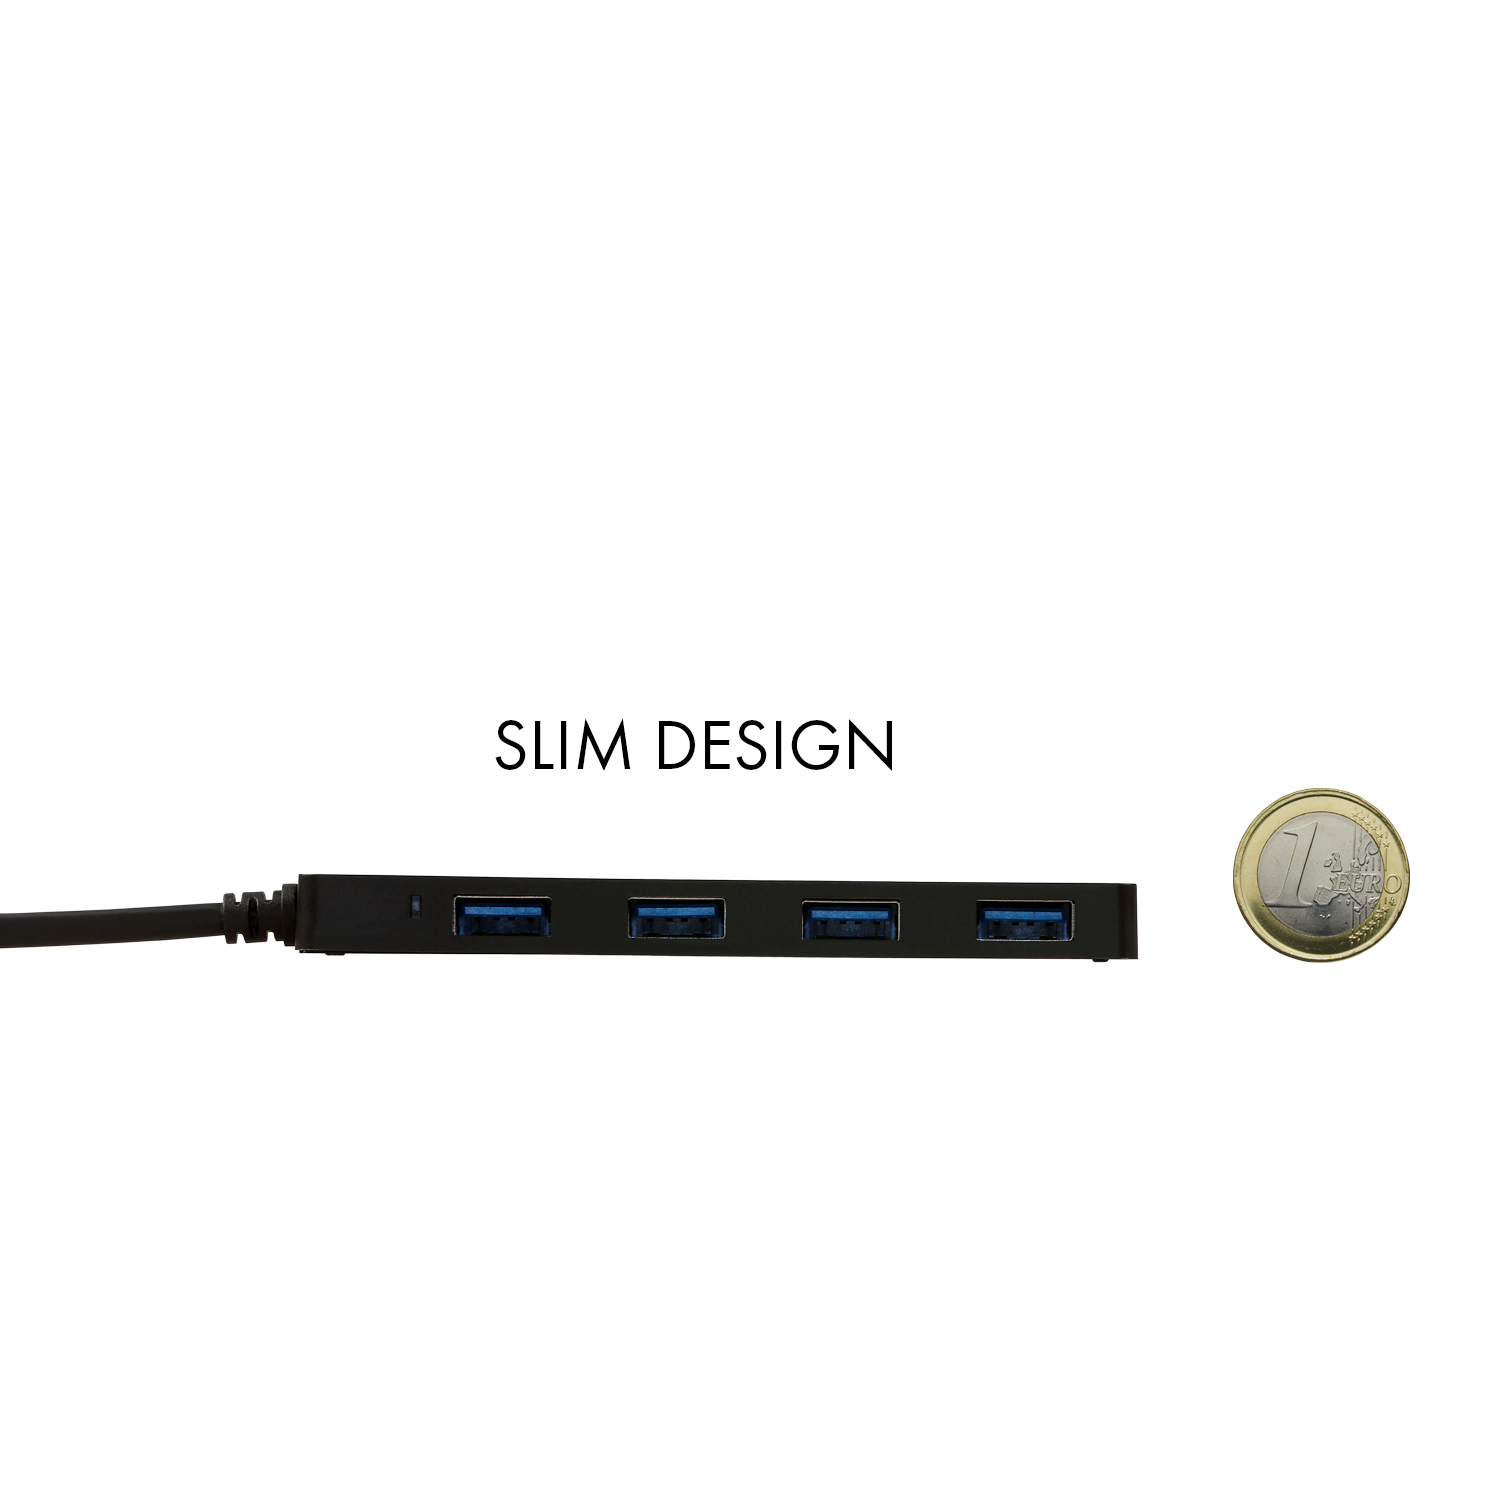 Obrázek i-tec USB 3.0 SLIM HUB 4 Port passive - Black